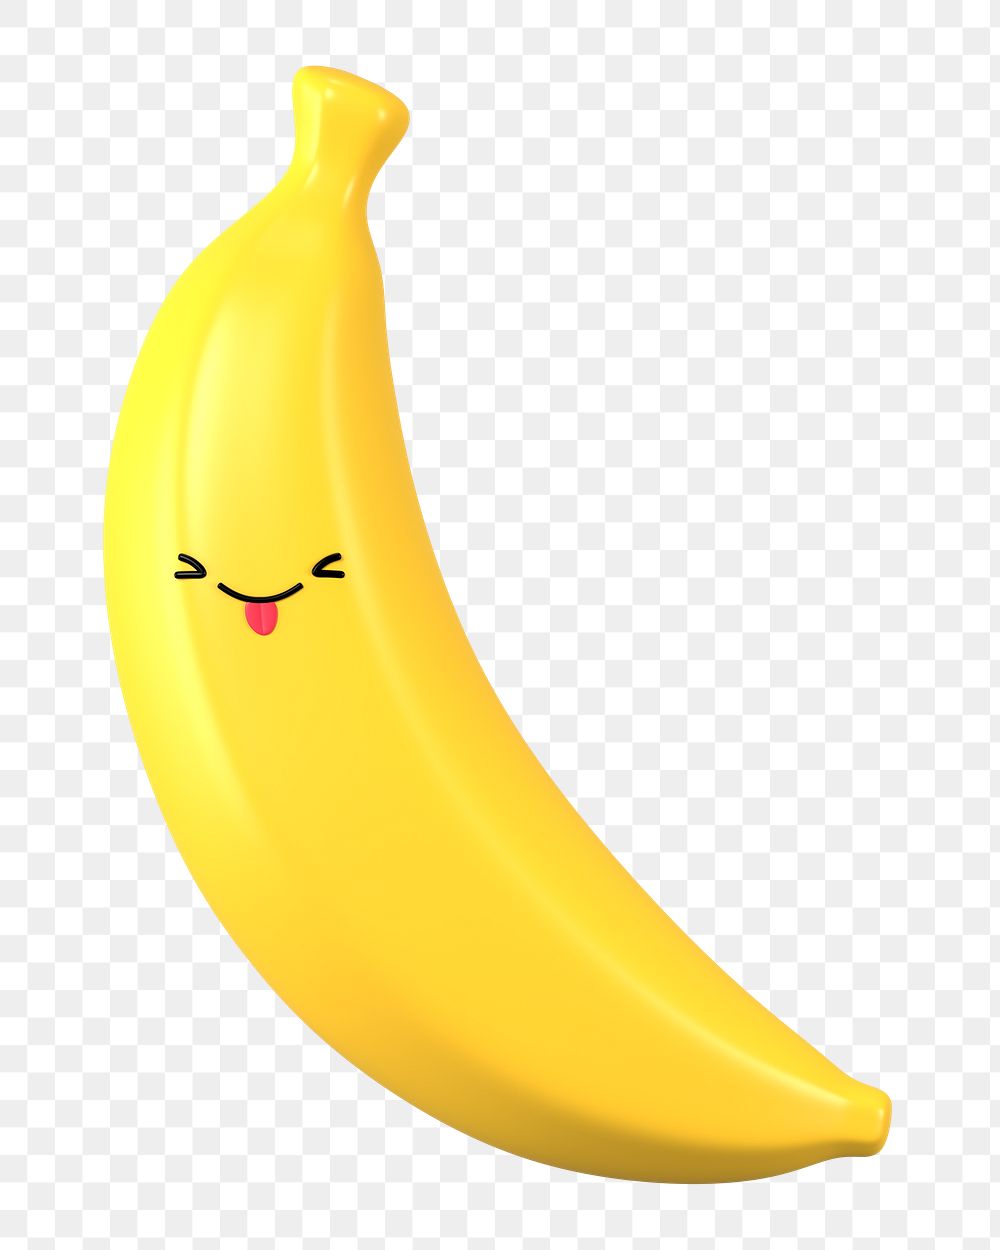 Playful banana png 3D stick tongue out emoticon, transparent background